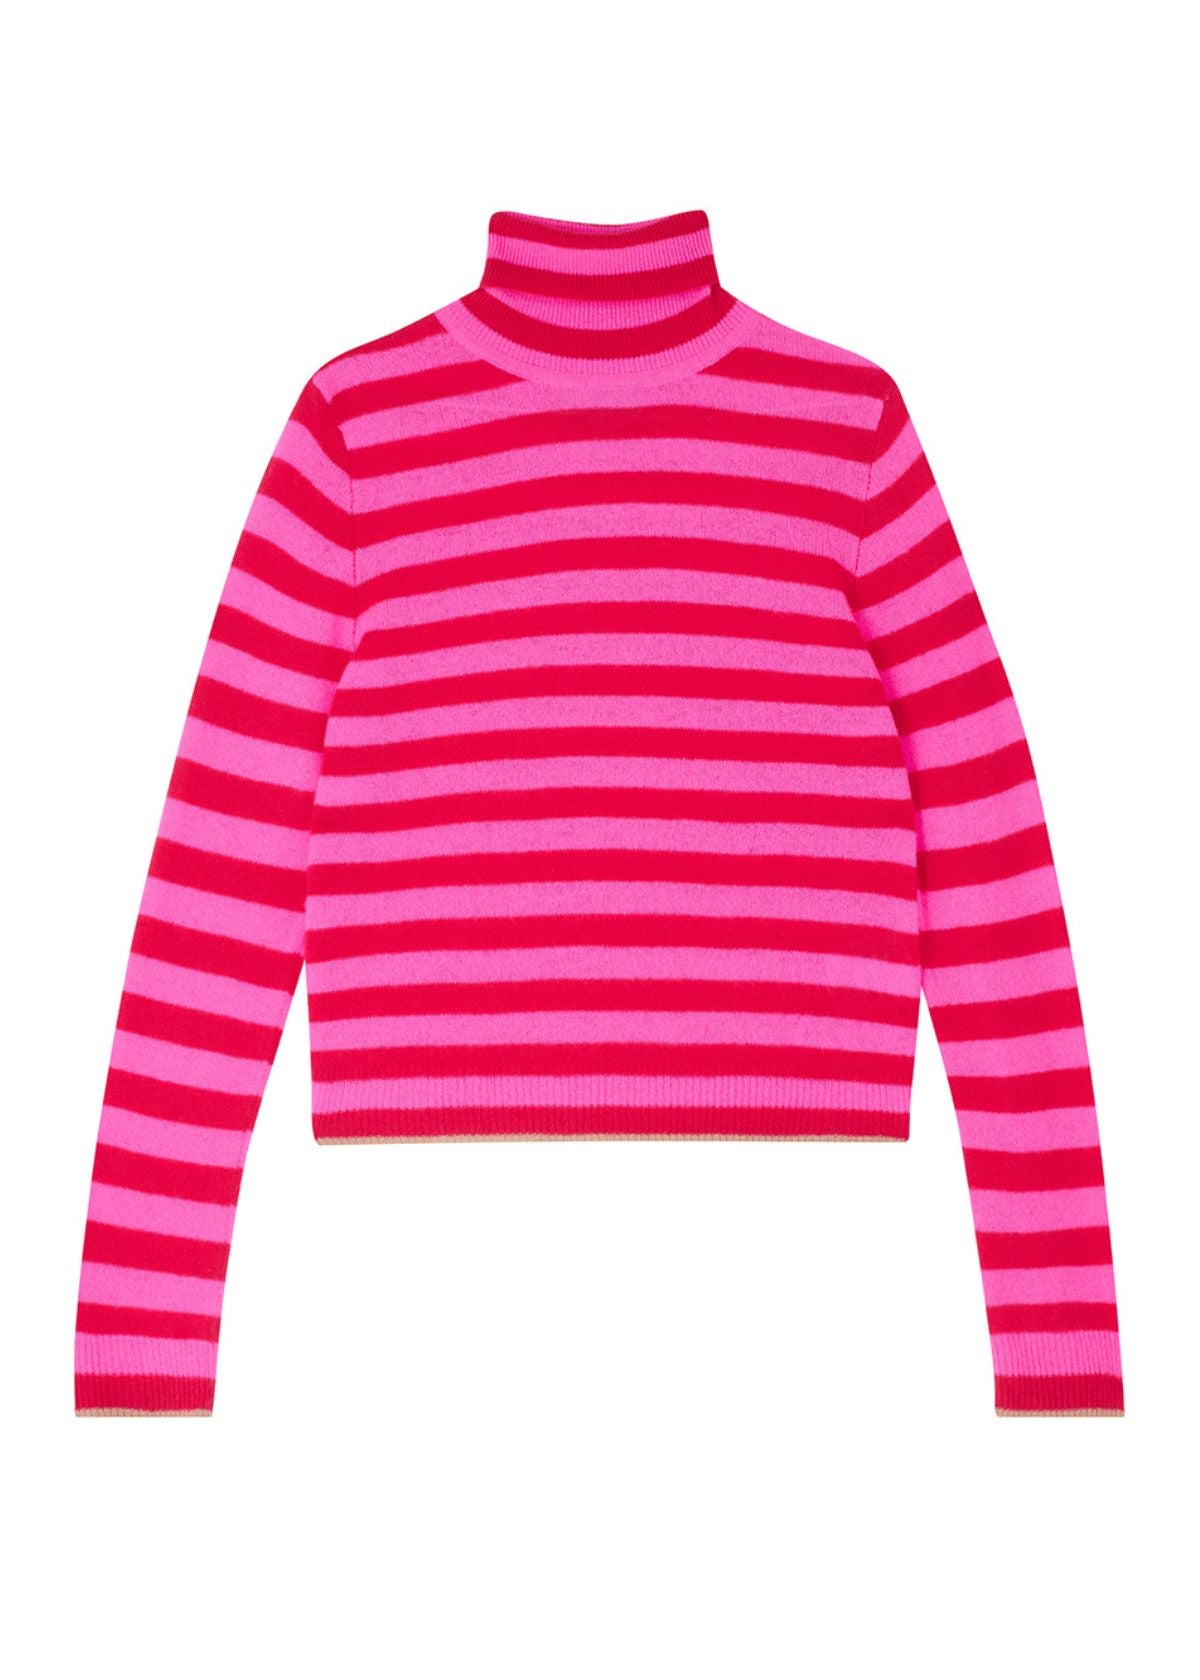 JUMPER 1234 Little Stripe Roll Neck Sweater - Pink, Cherry, Camel